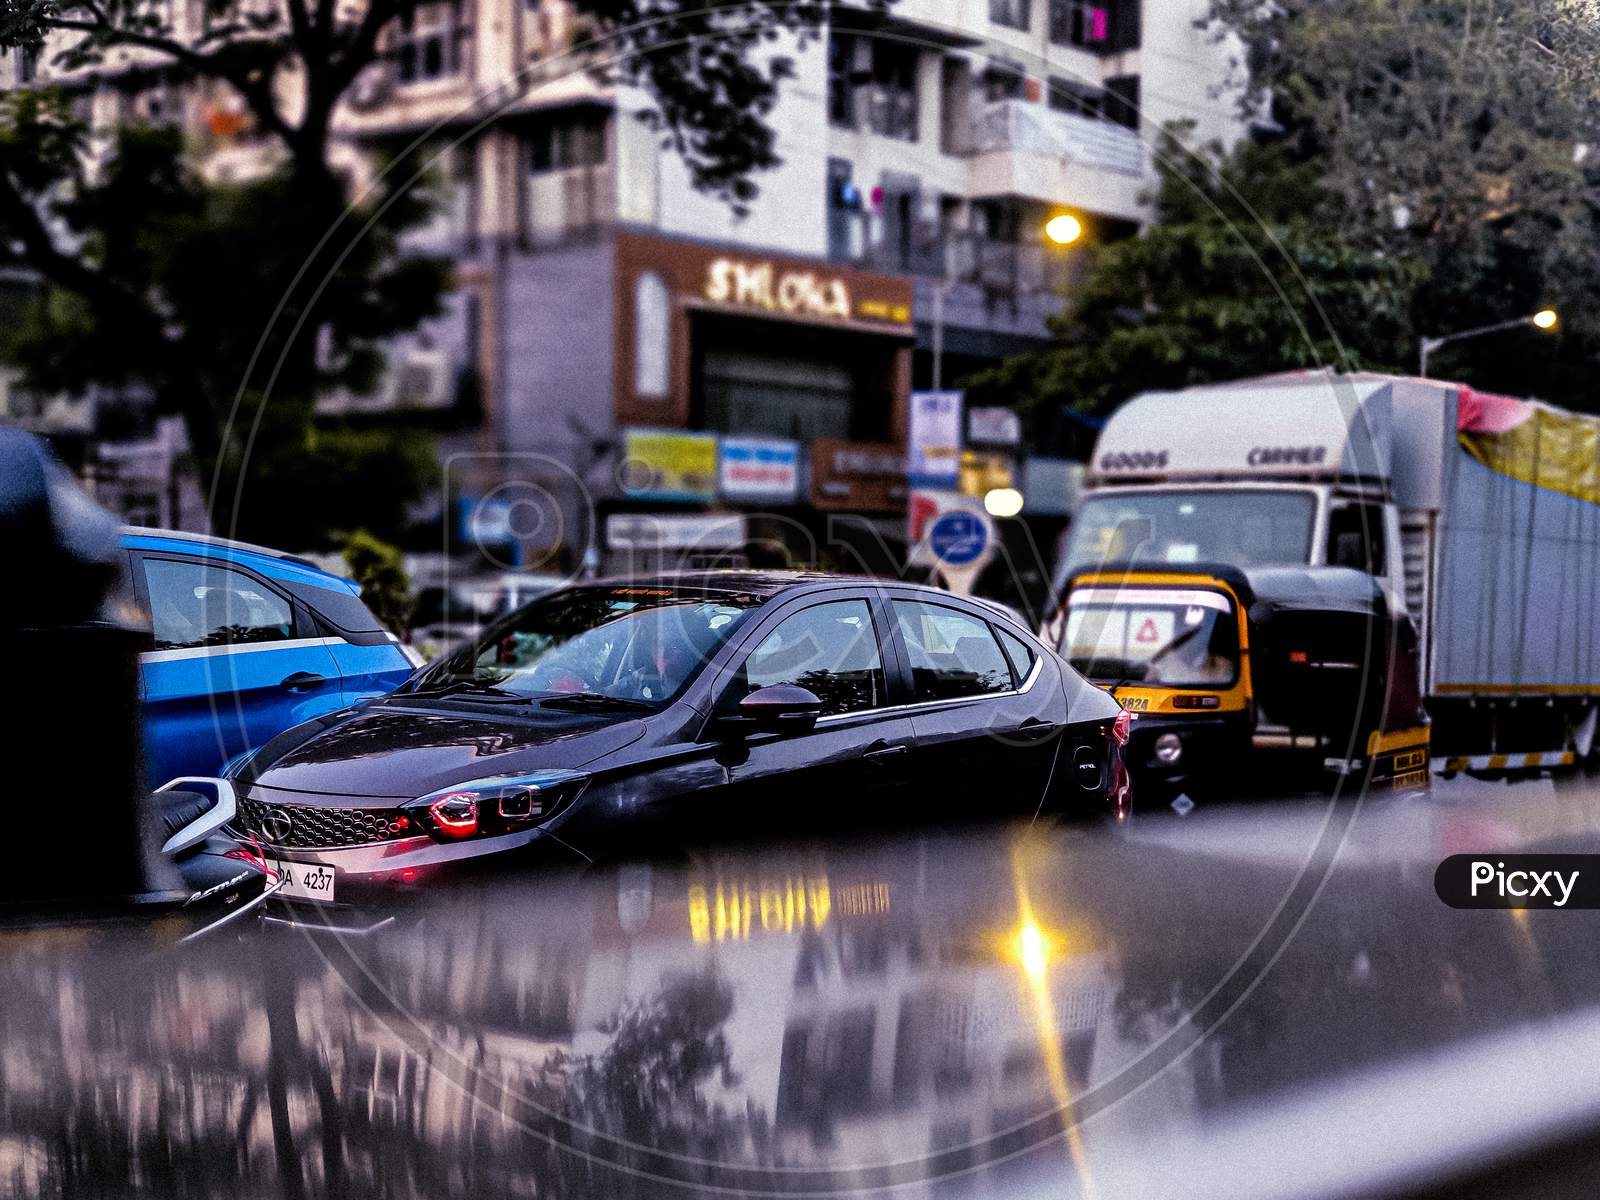 Streets of Mumbai